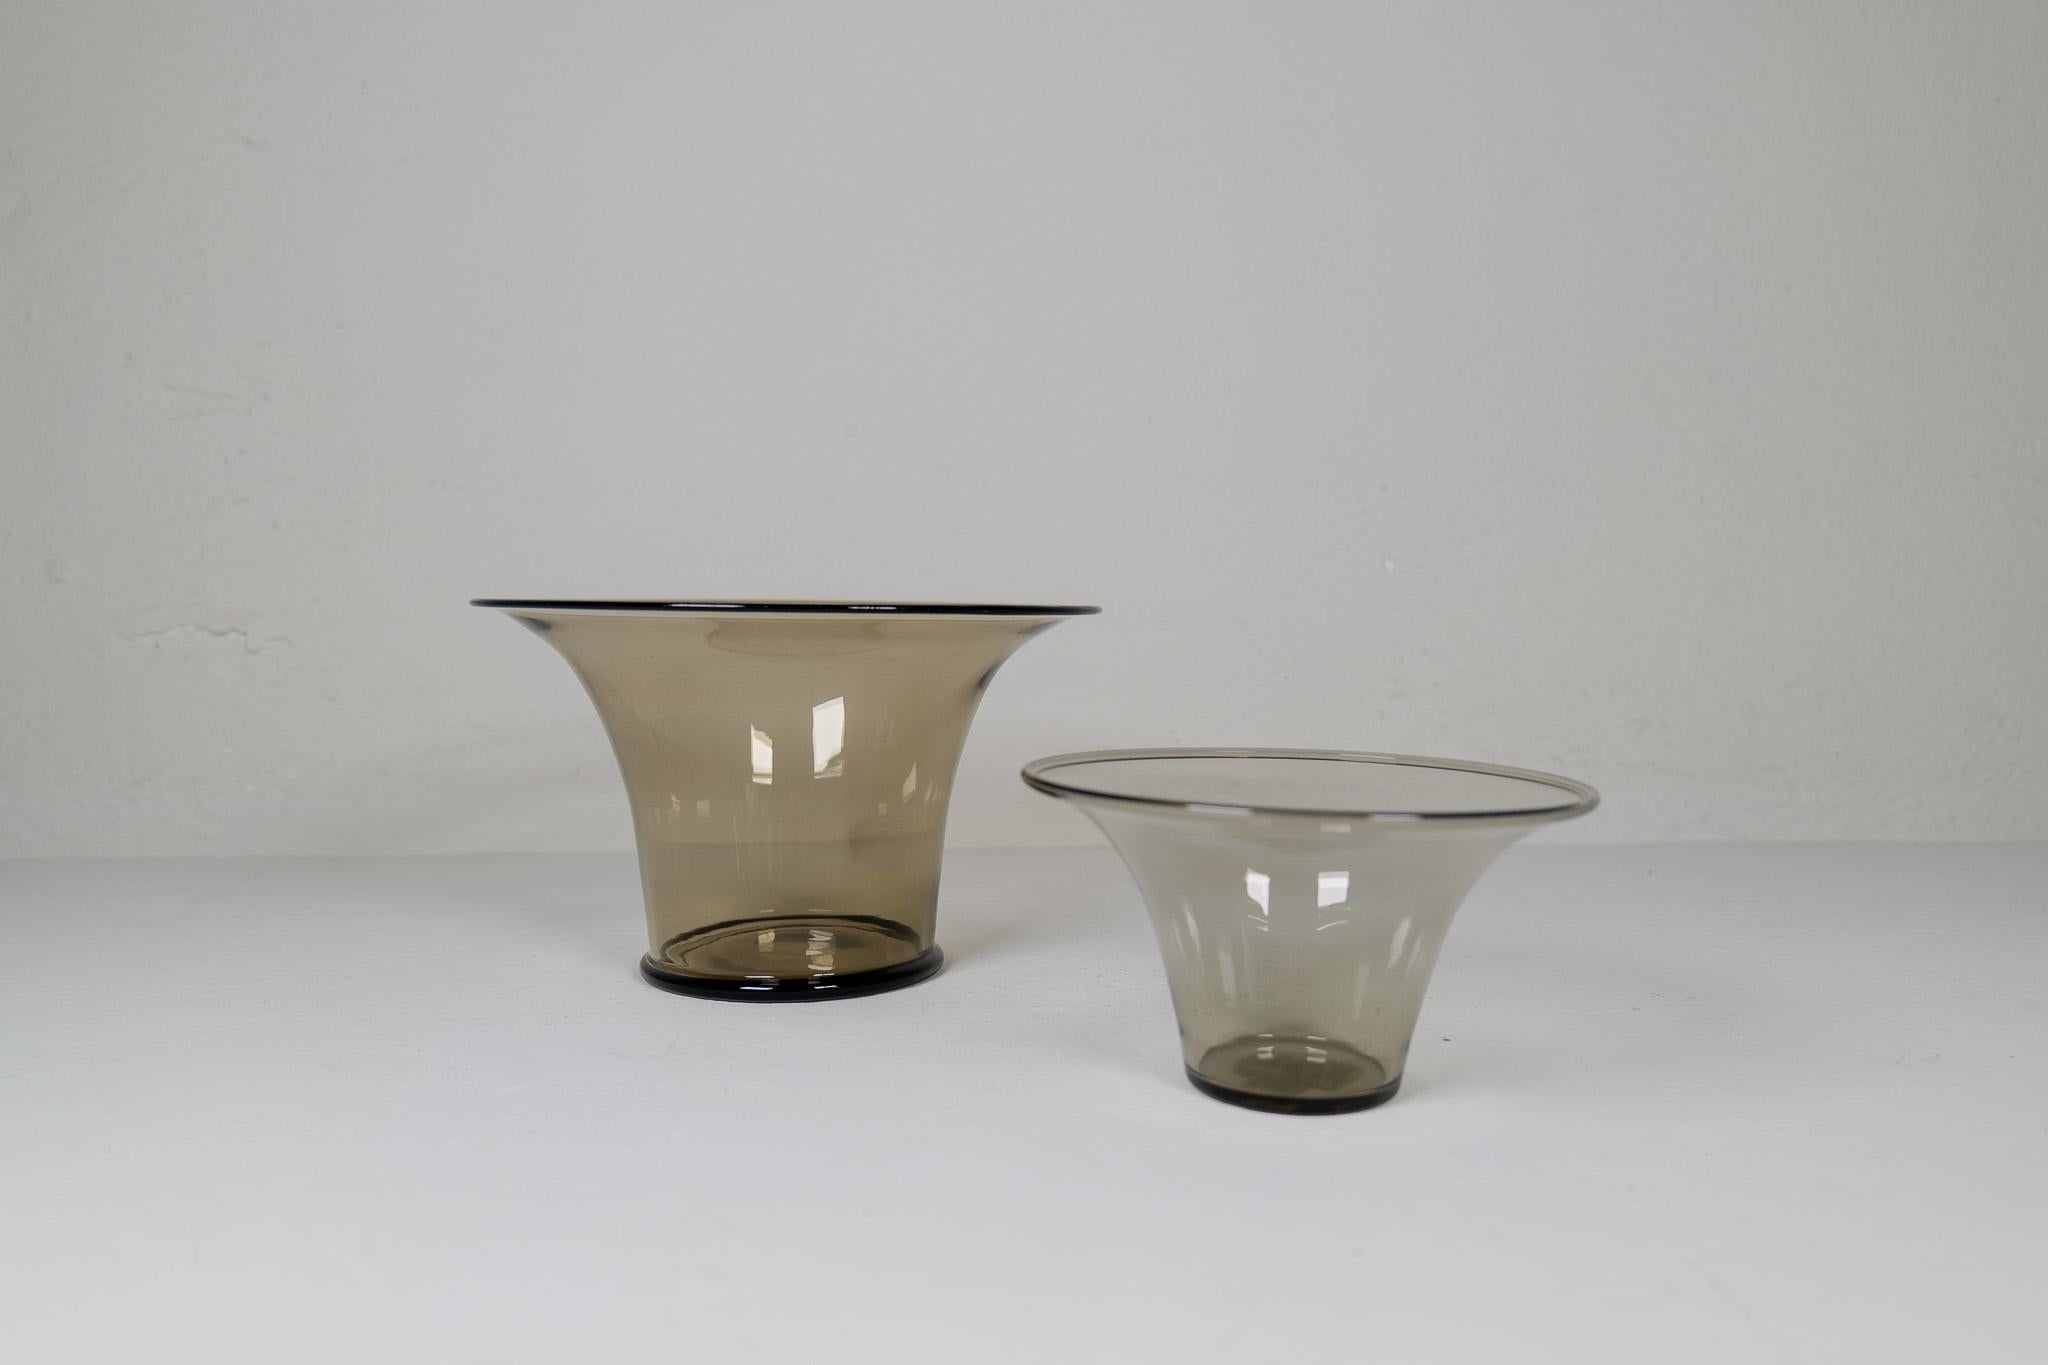  Art Deco Set of 2 Glass Bowls Simon Gate Orrefors, Sweden 1920s In Good Condition For Sale In Hillringsberg, SE